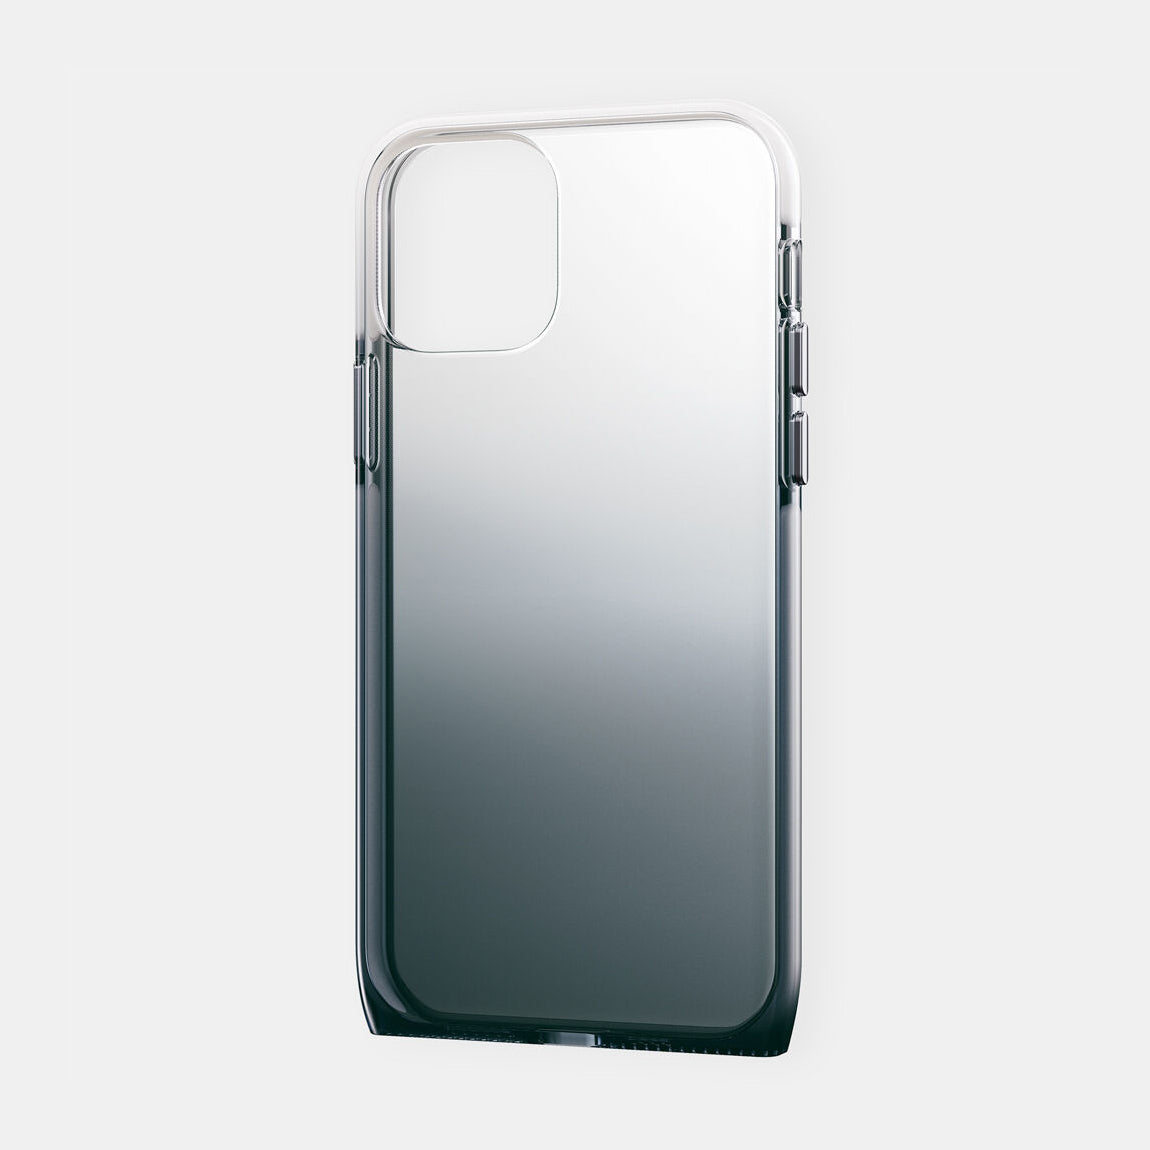 Bodyguardz Harmony Slim Protective Case For iPhone 12 mini - SHADE - Mac Addict